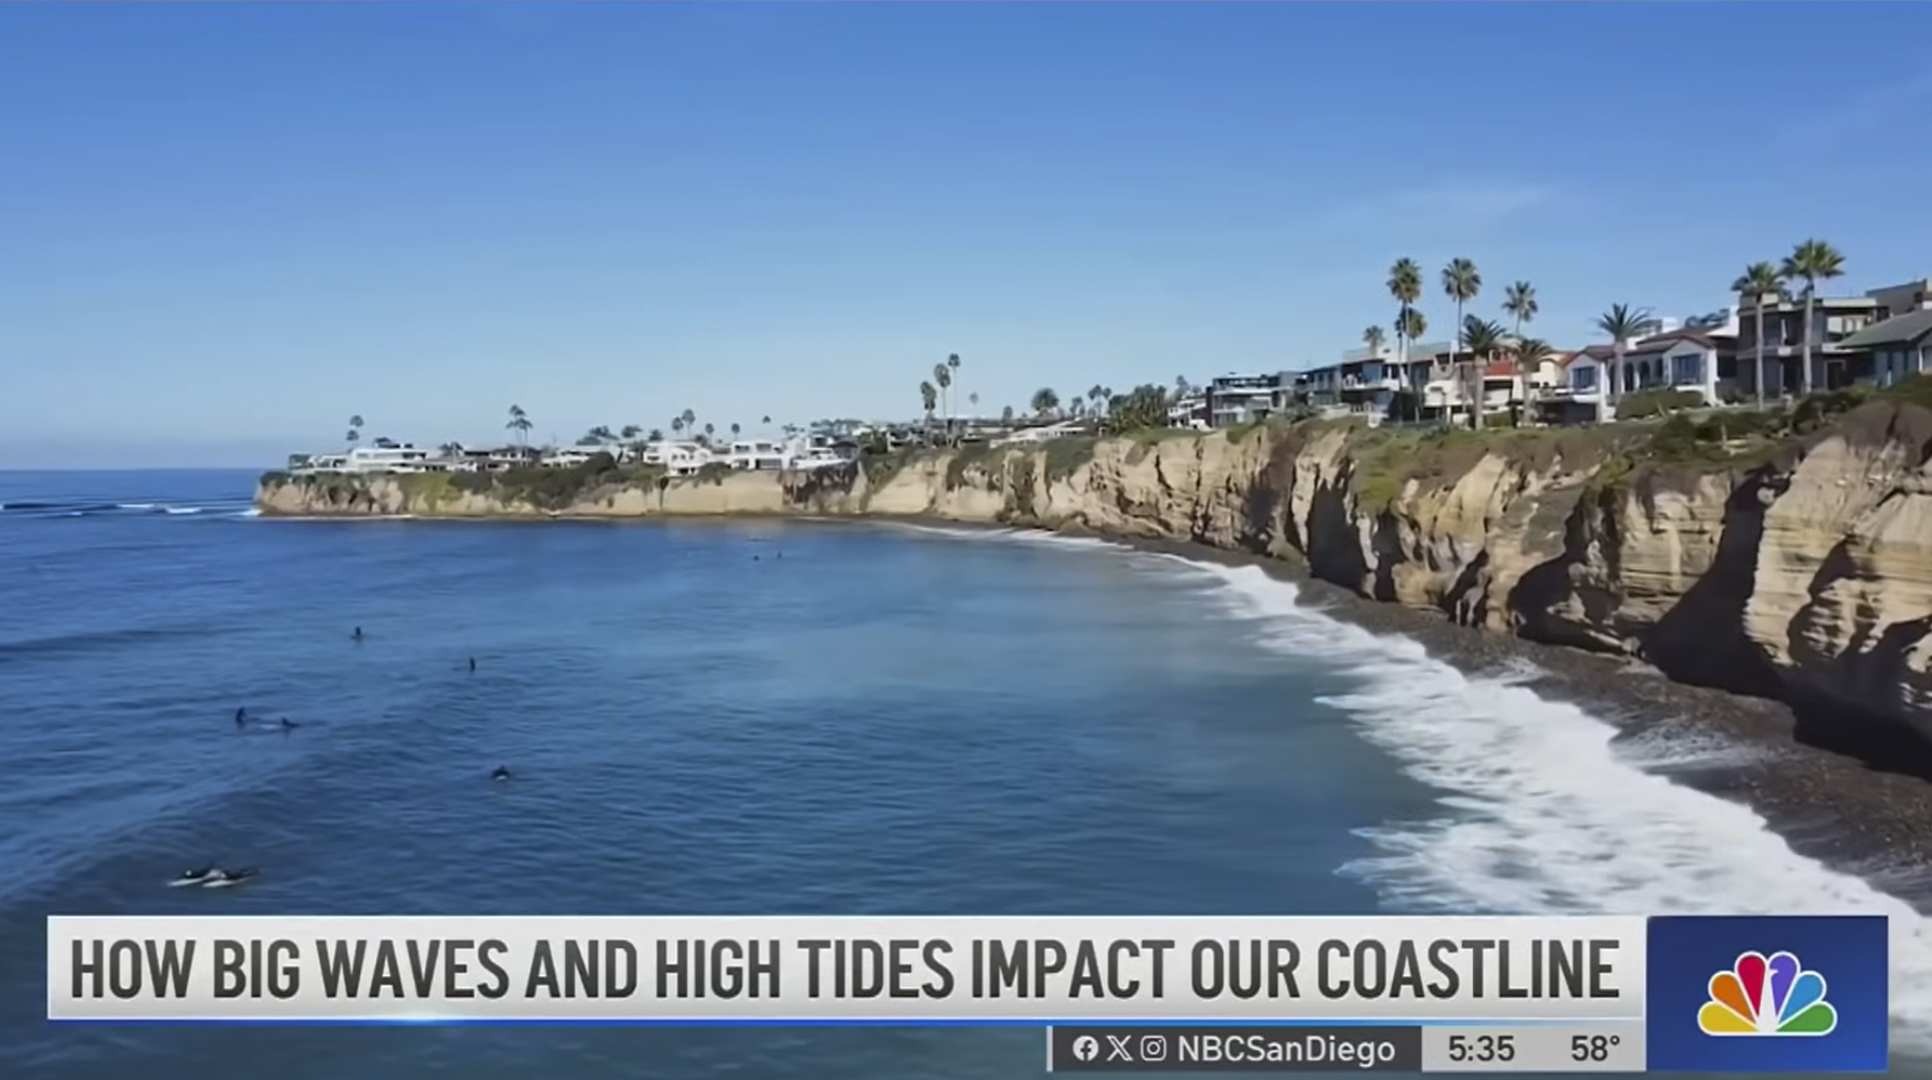 Screenshot from NBC 7 San Diego's "How is Coastal Erosion Impacting Life in San Diego" via Youtube.